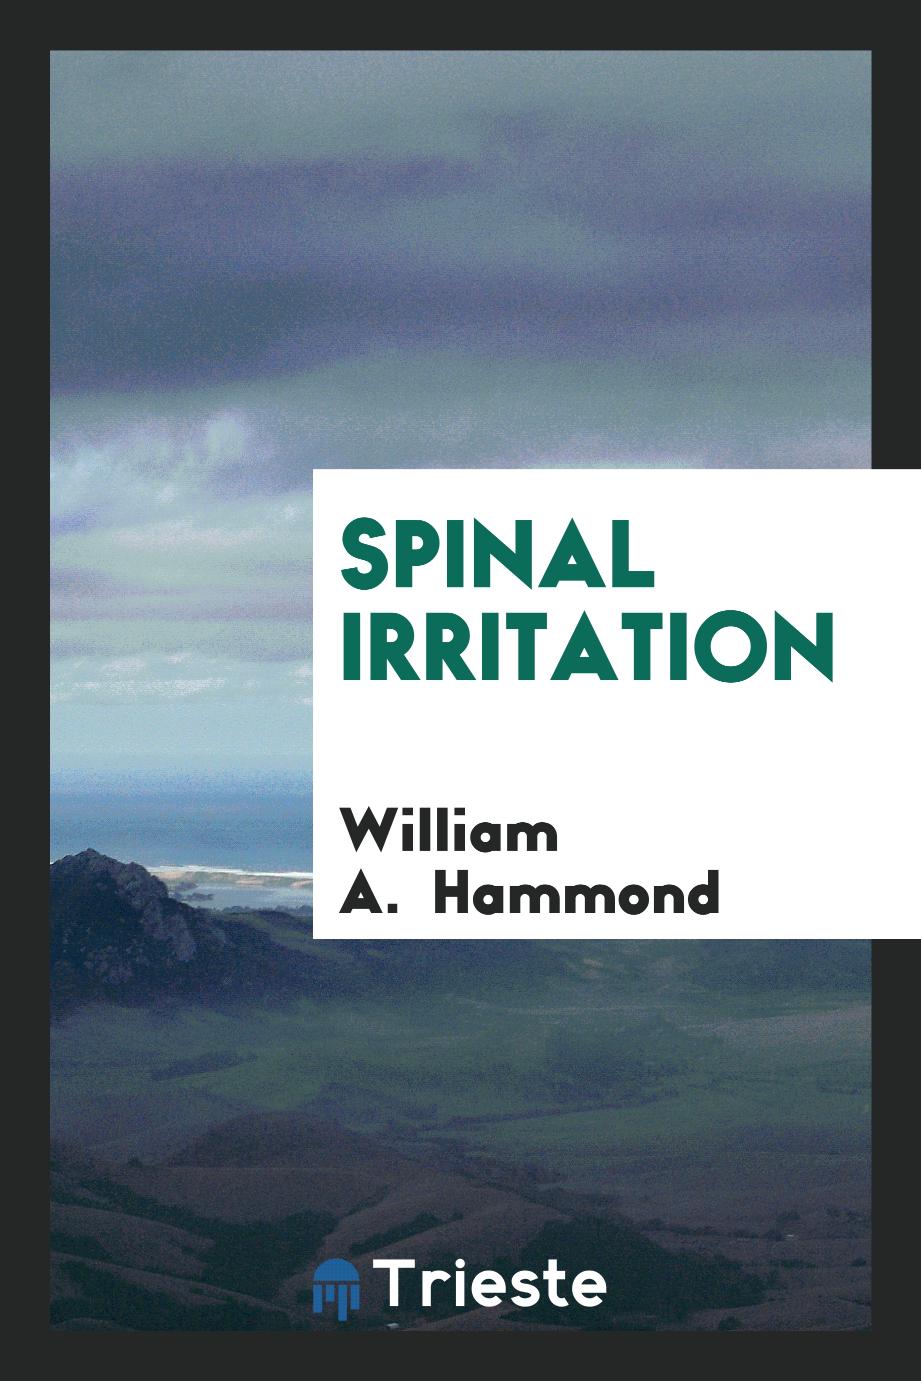 Spinal irritation